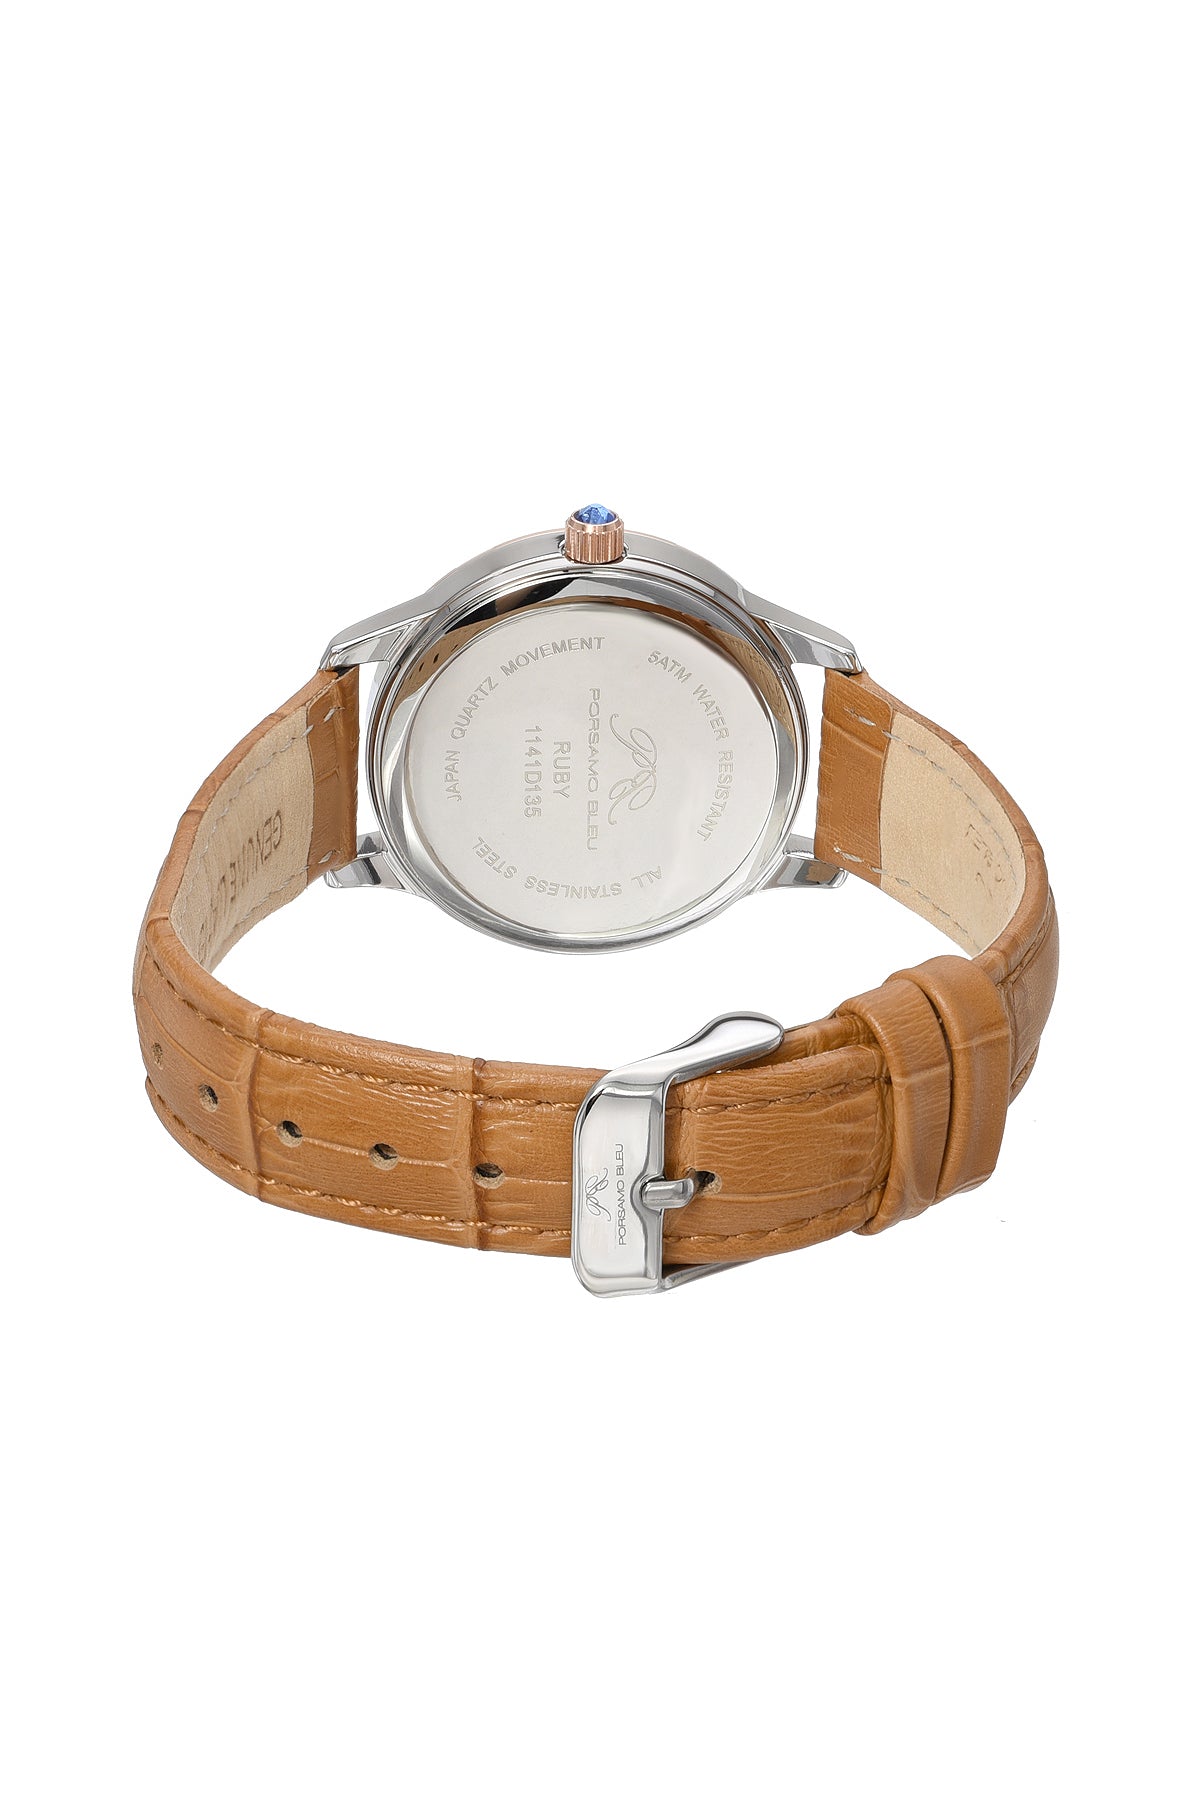 Porsamo Bleu Ruby Luxury Women's Genuine Leather Band Watch, Silver, Rose 1141DRUL